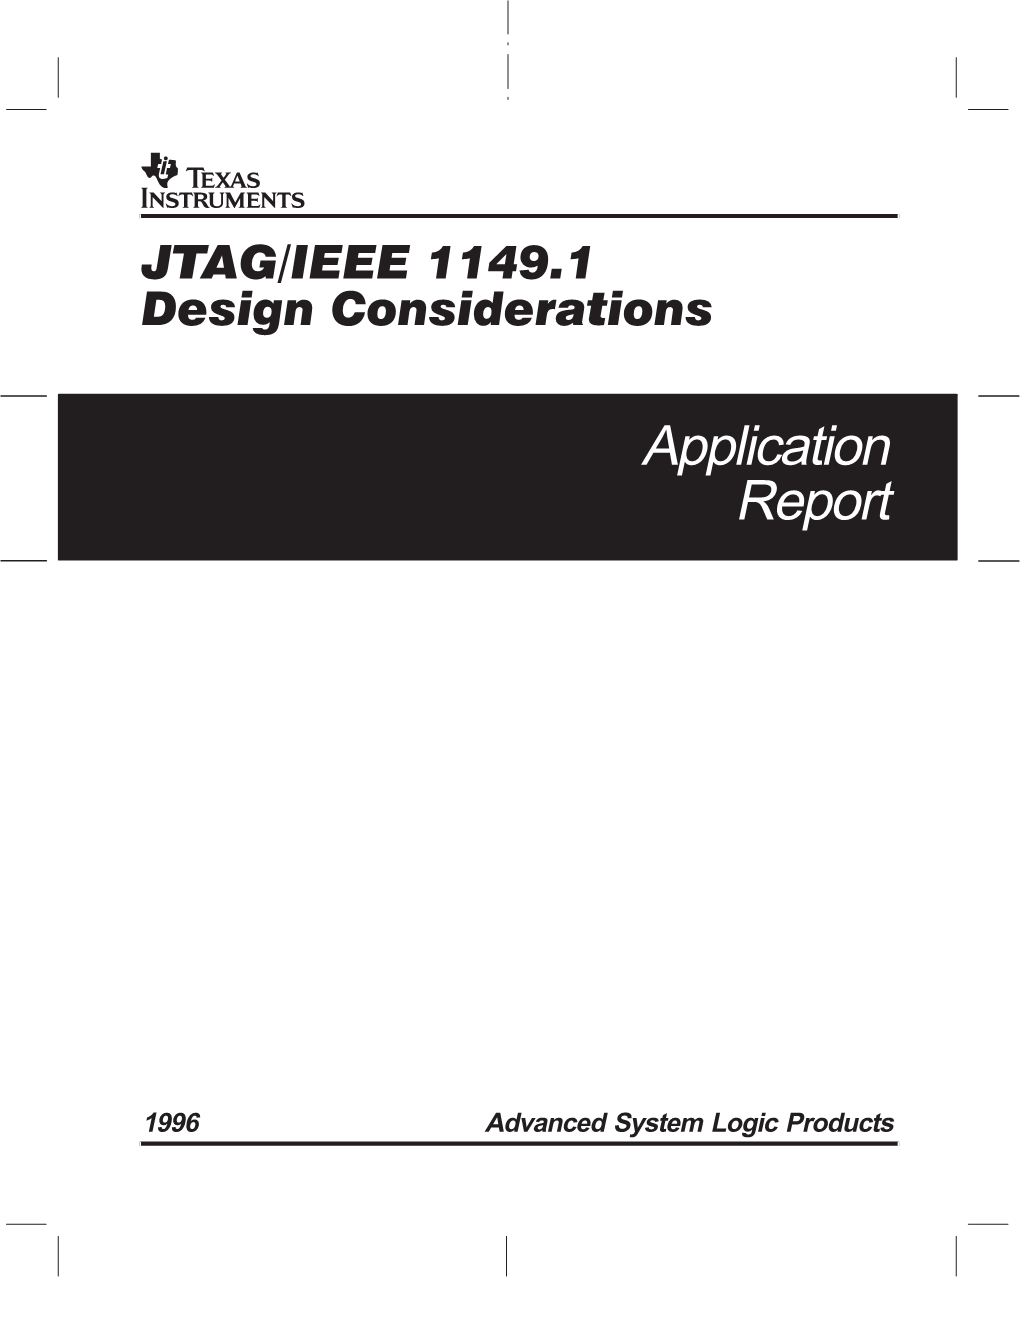 JTAG/IEEE 1149.1 Design Considerations